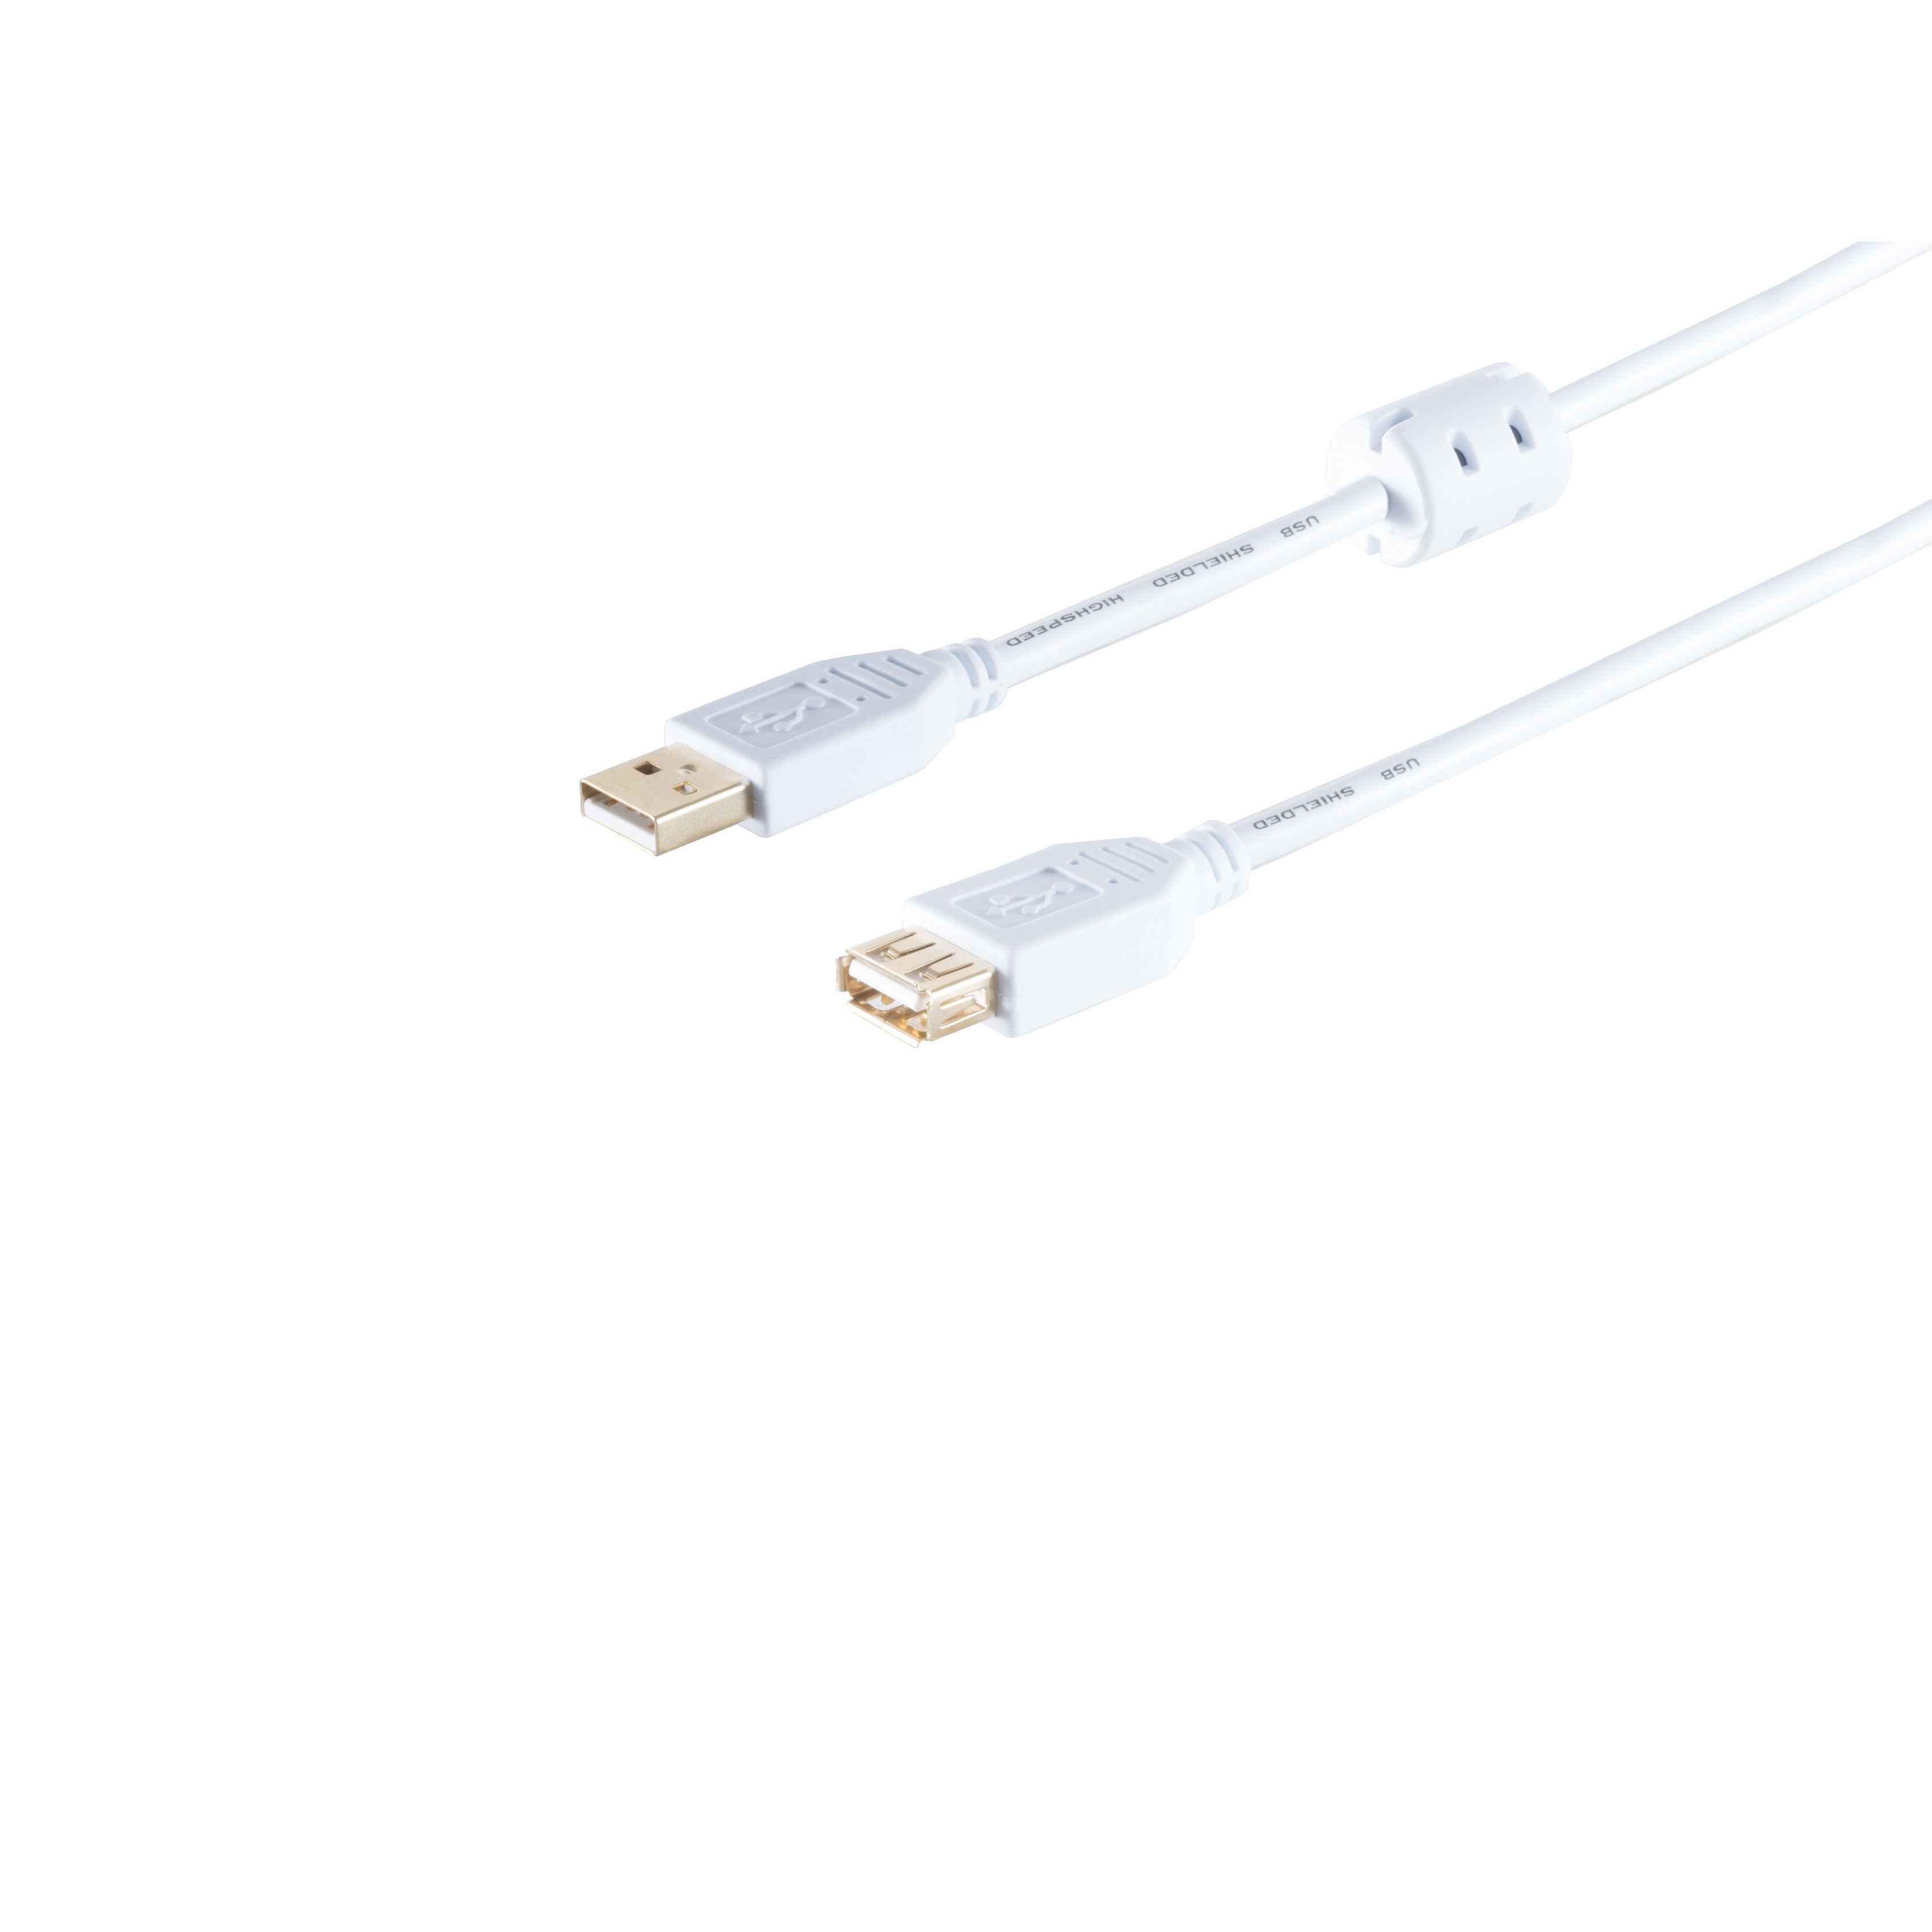 Buchse weiß, MAXIMUM S/CONN 5m USB Speed USB A/A Verlängerung, Kabel Ferrit, High CONNECTIVITY mit 2.0